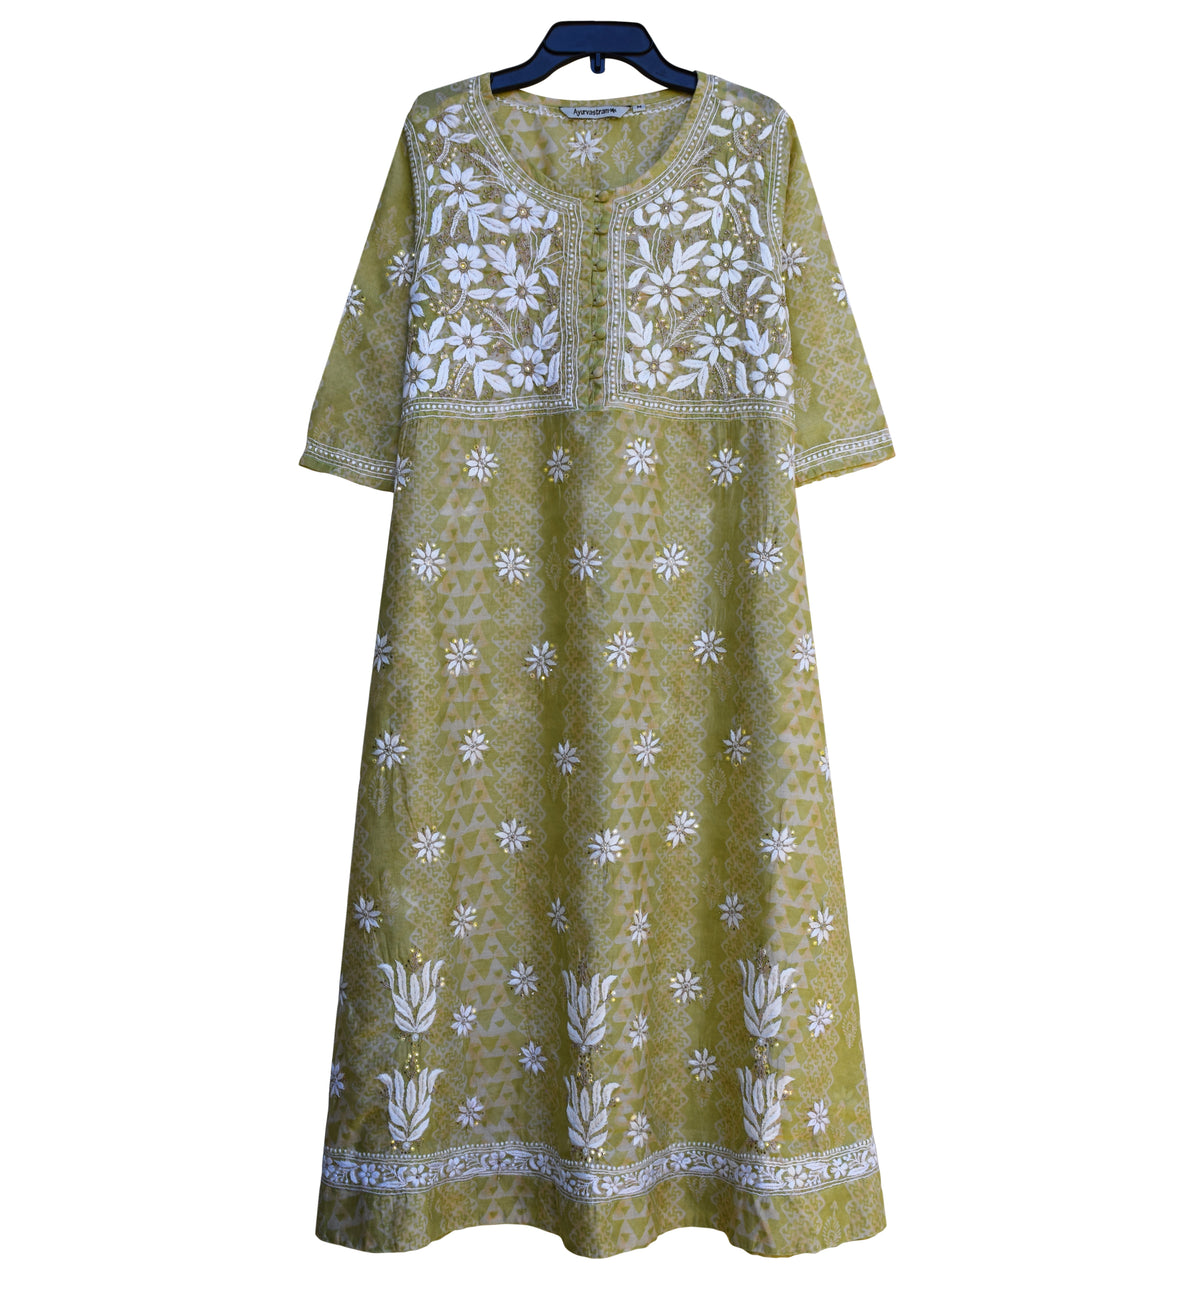 CHANDRIKA Chanderi Silk Hand Embroidered A Line Tunic Dress Kurta: Made to Order/Customizable